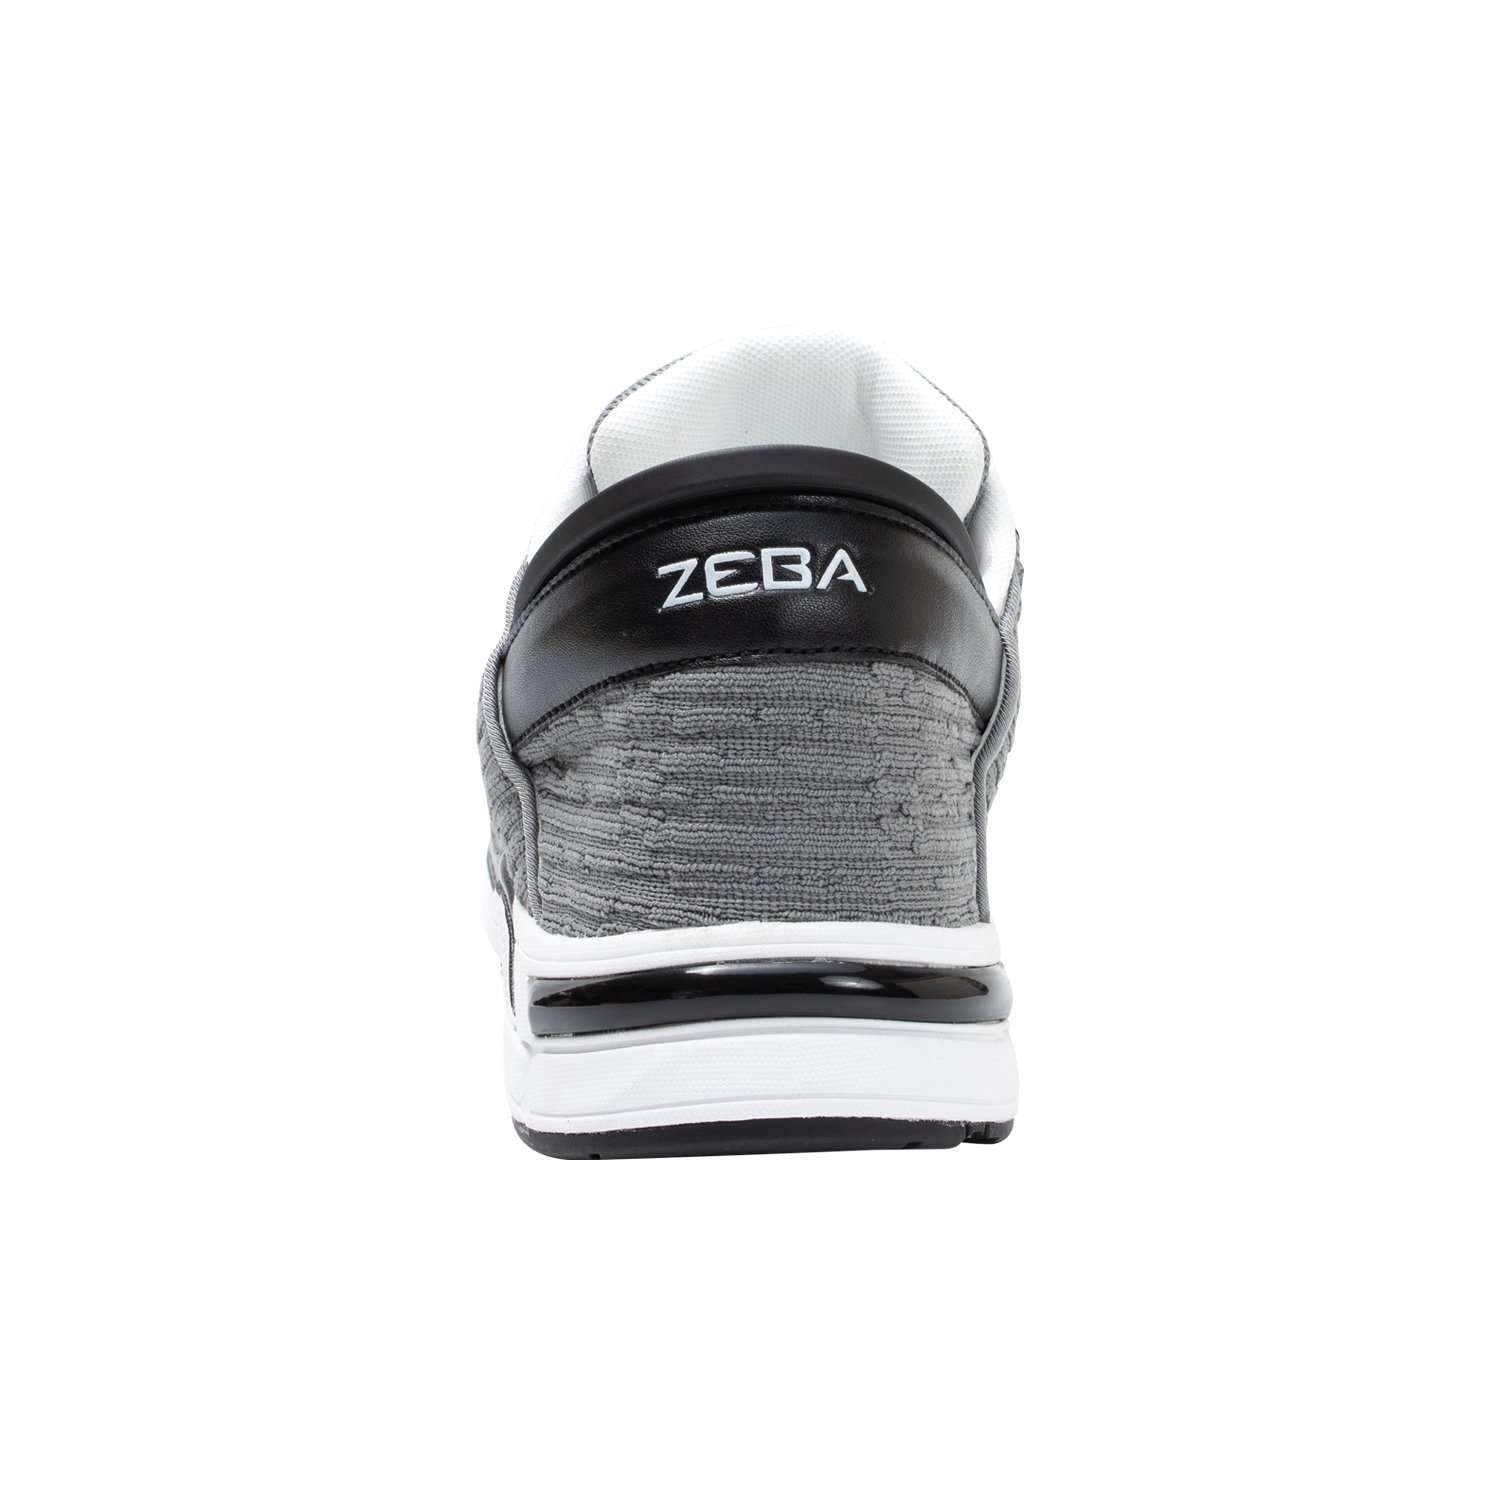 zeba shoes reviews